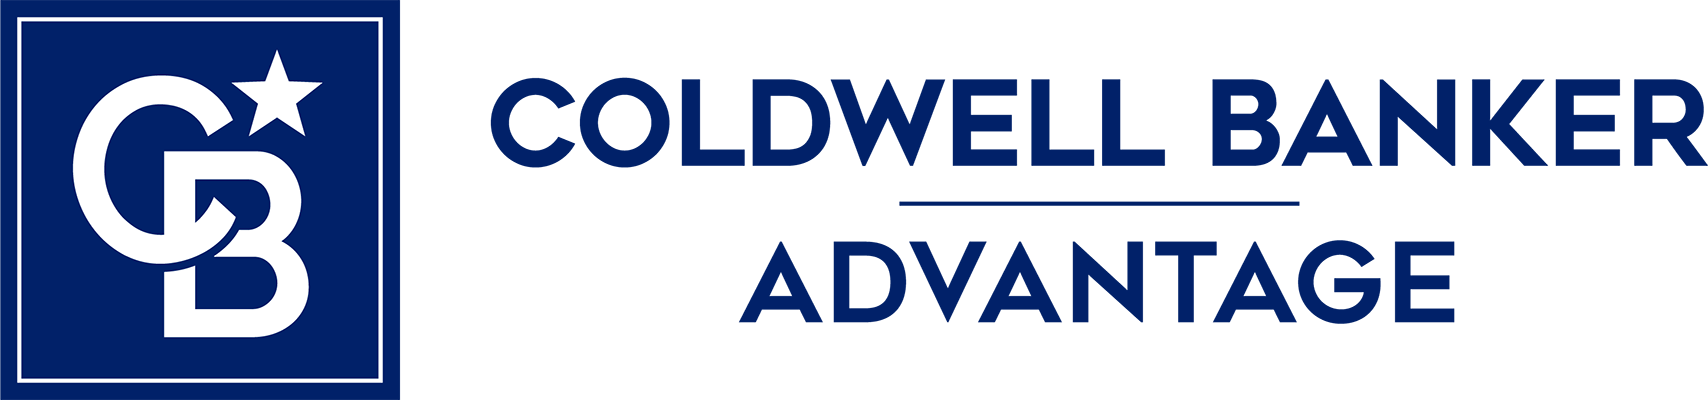 Carolyn Strickland - Coldwell Banker Advantage Logo